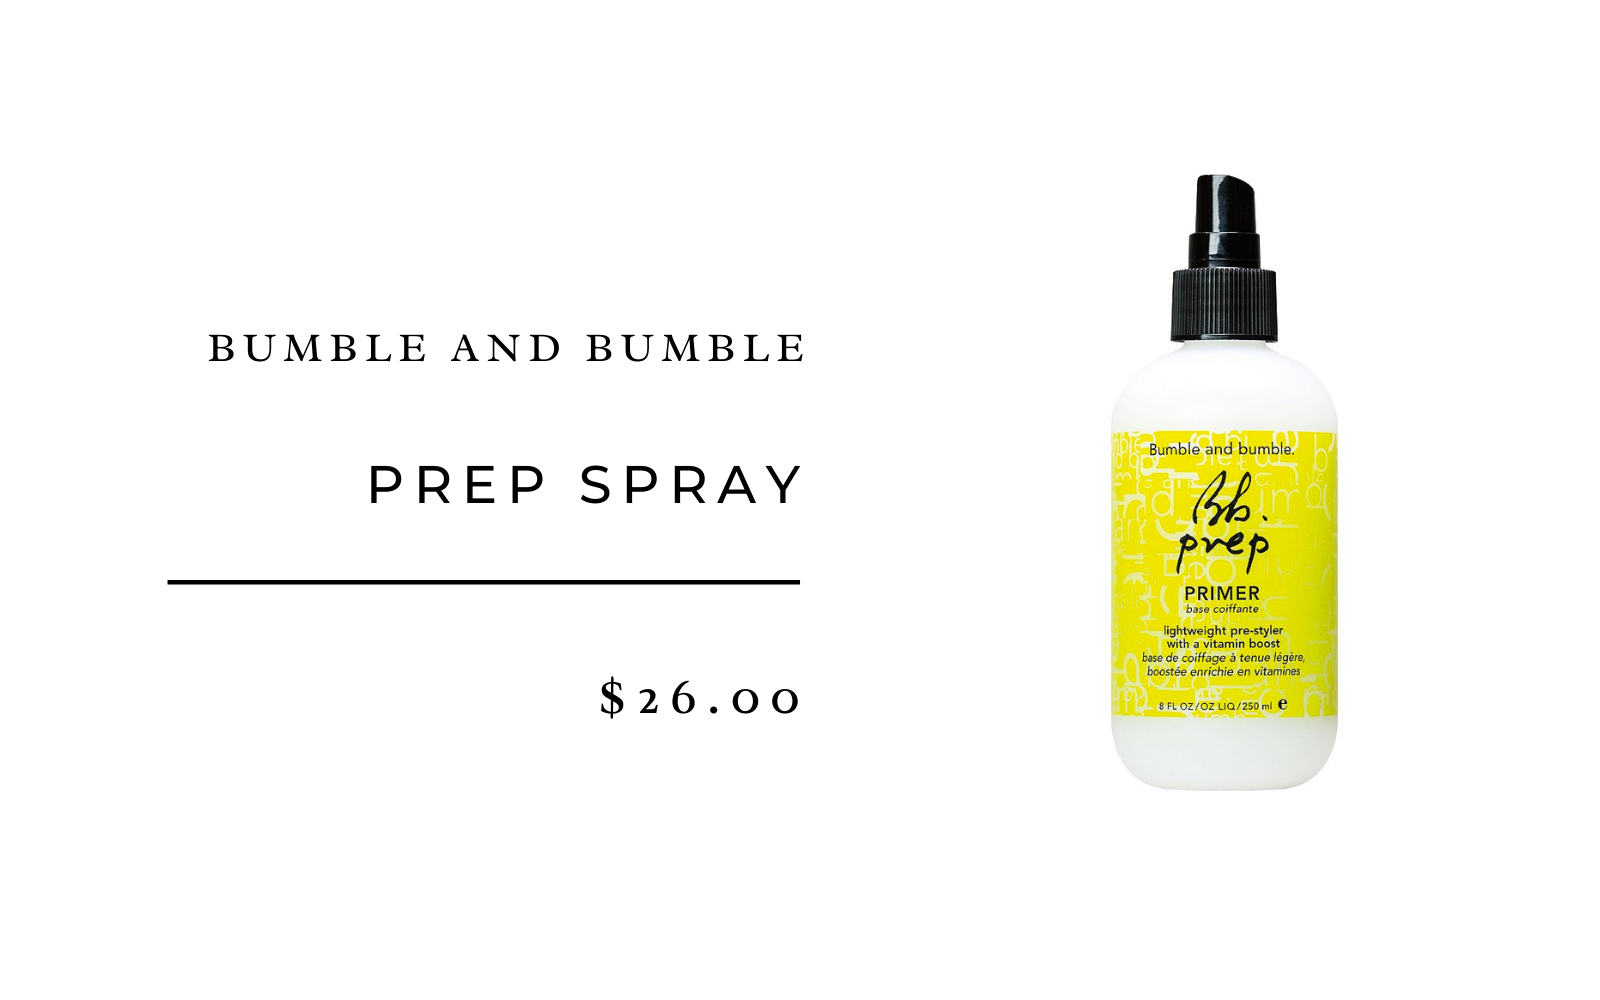 Bumble and Bumble prep spray